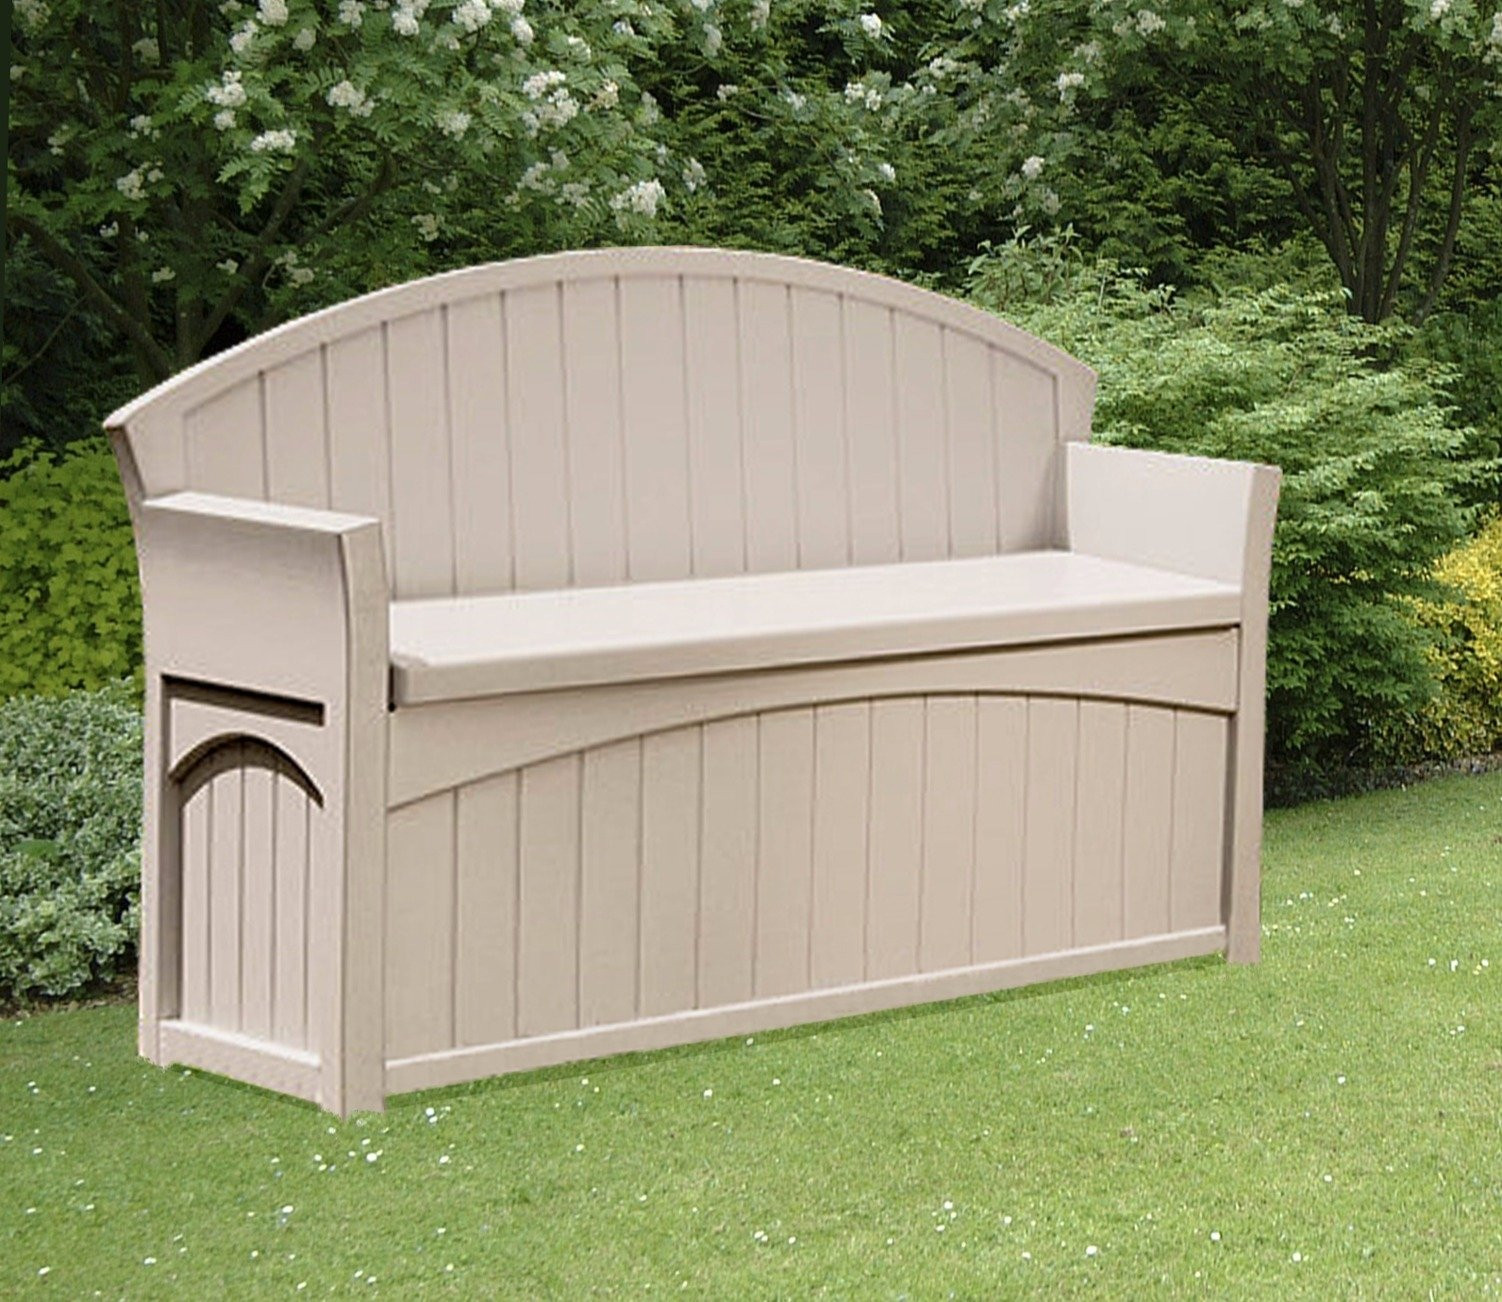 Patio Bench Storage
 Suncast Patio Garden Outdoor Bench with 50 Gallon Storage